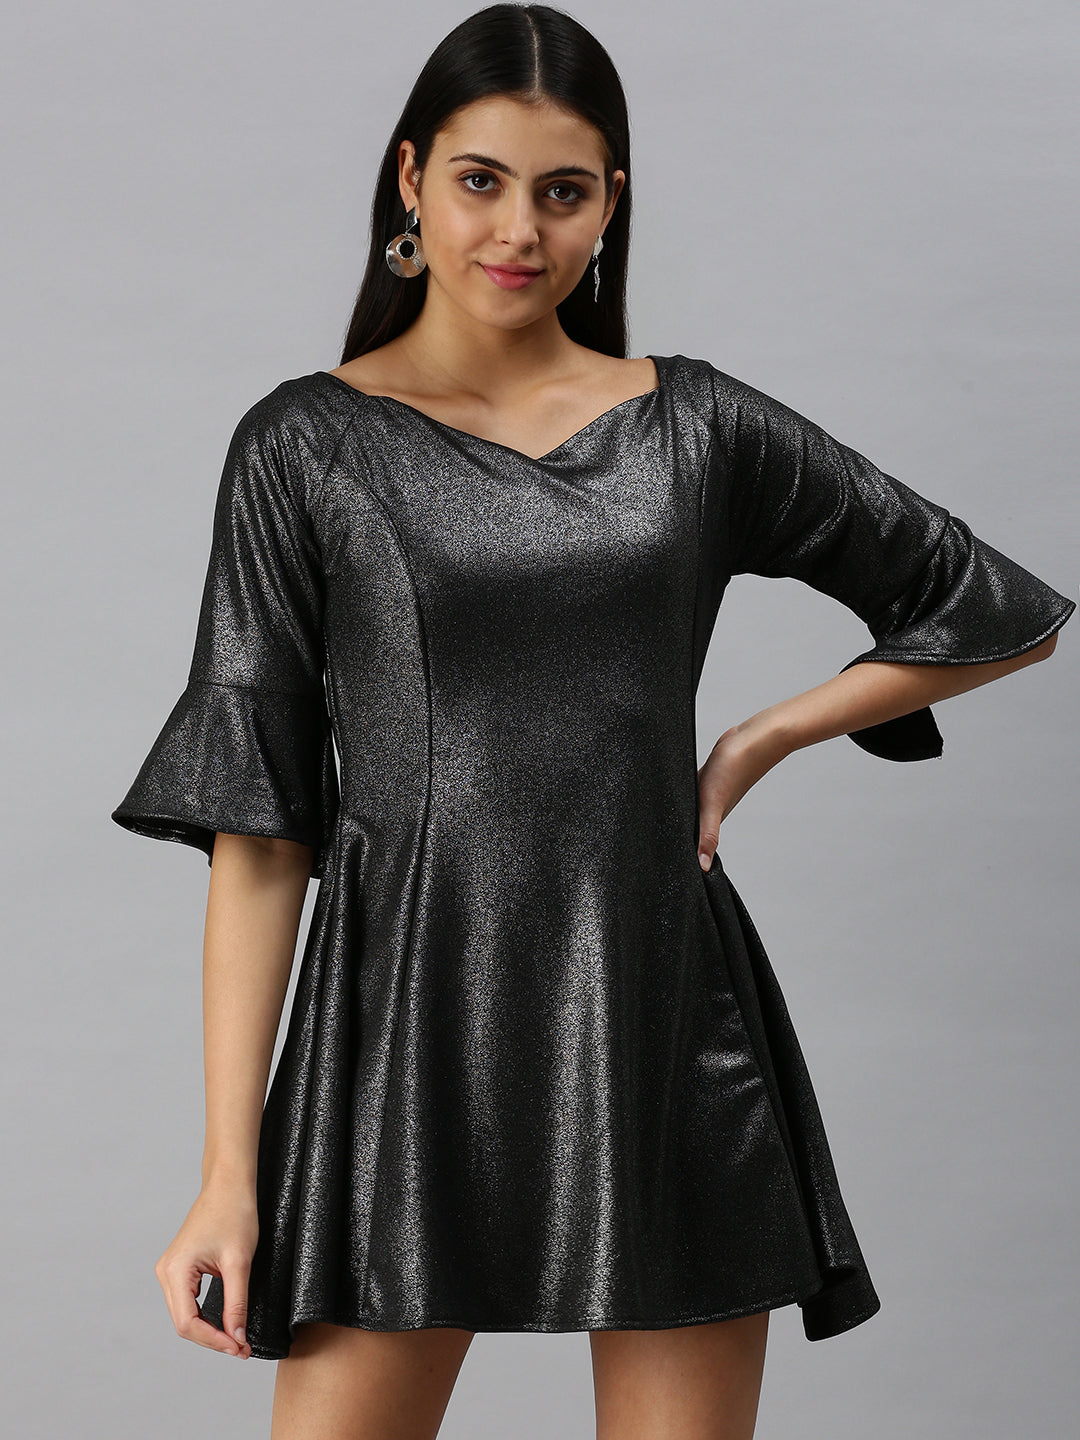 Women Off-Shoulder Solid Fit and Flare Black Dress